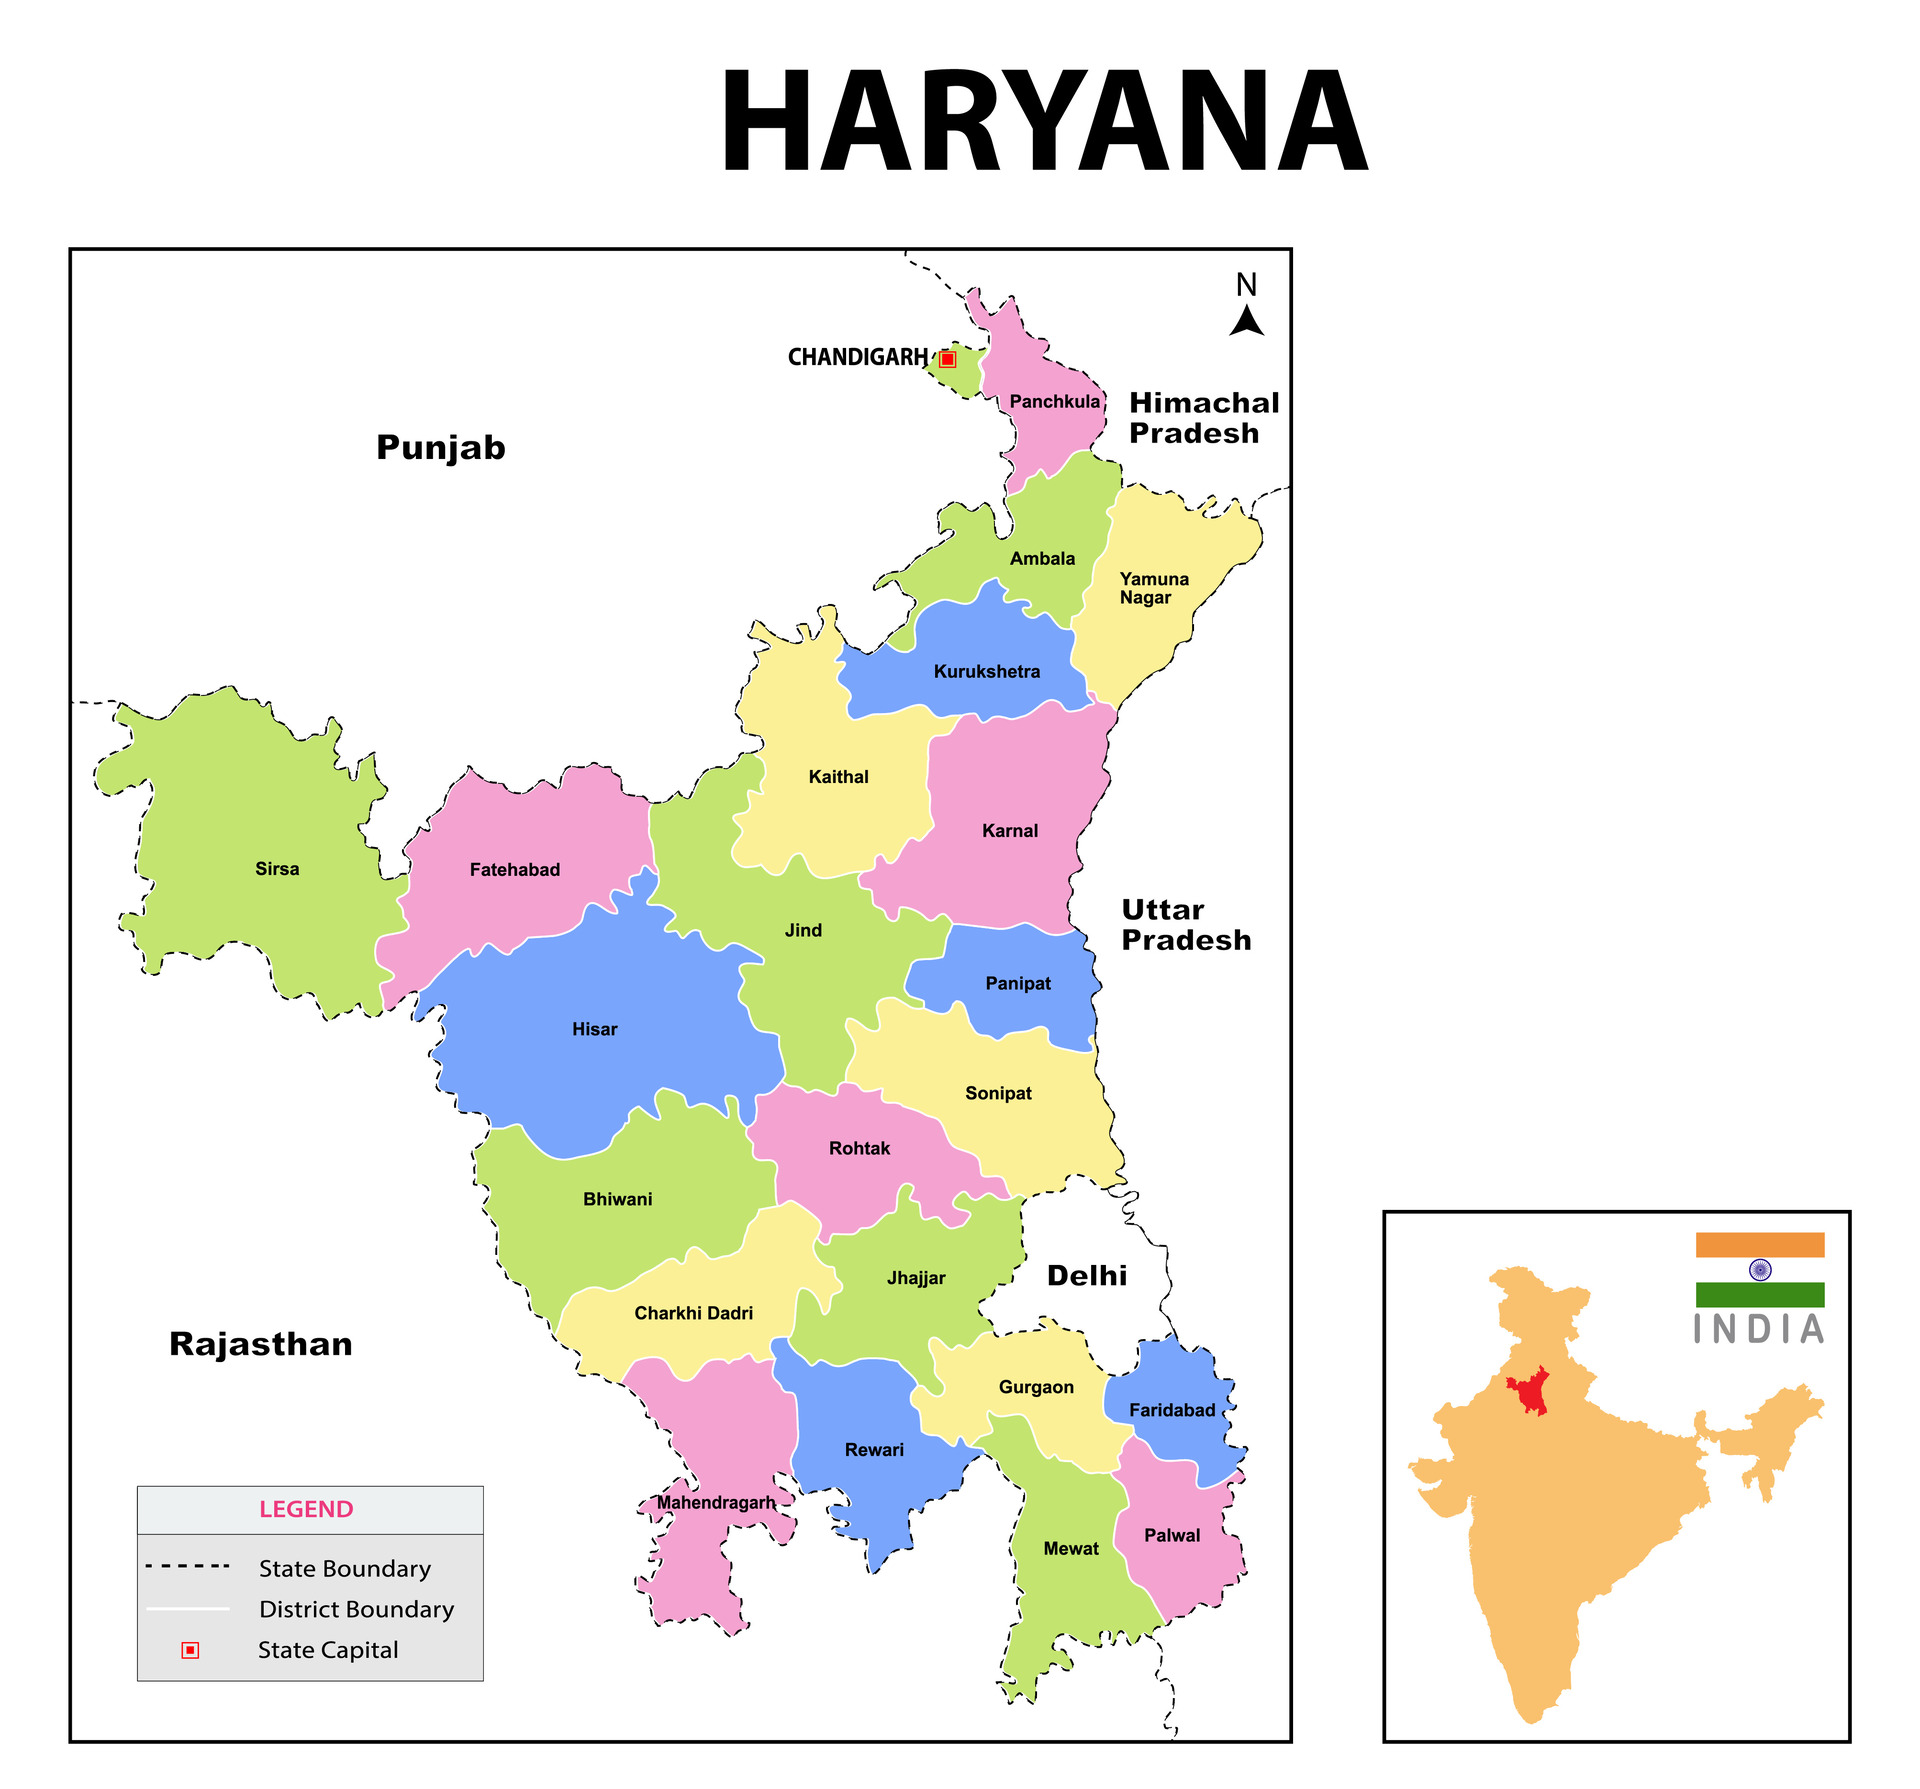 Haryana Forms 4-Member Panel to Redraw Administrative Boundaries of State